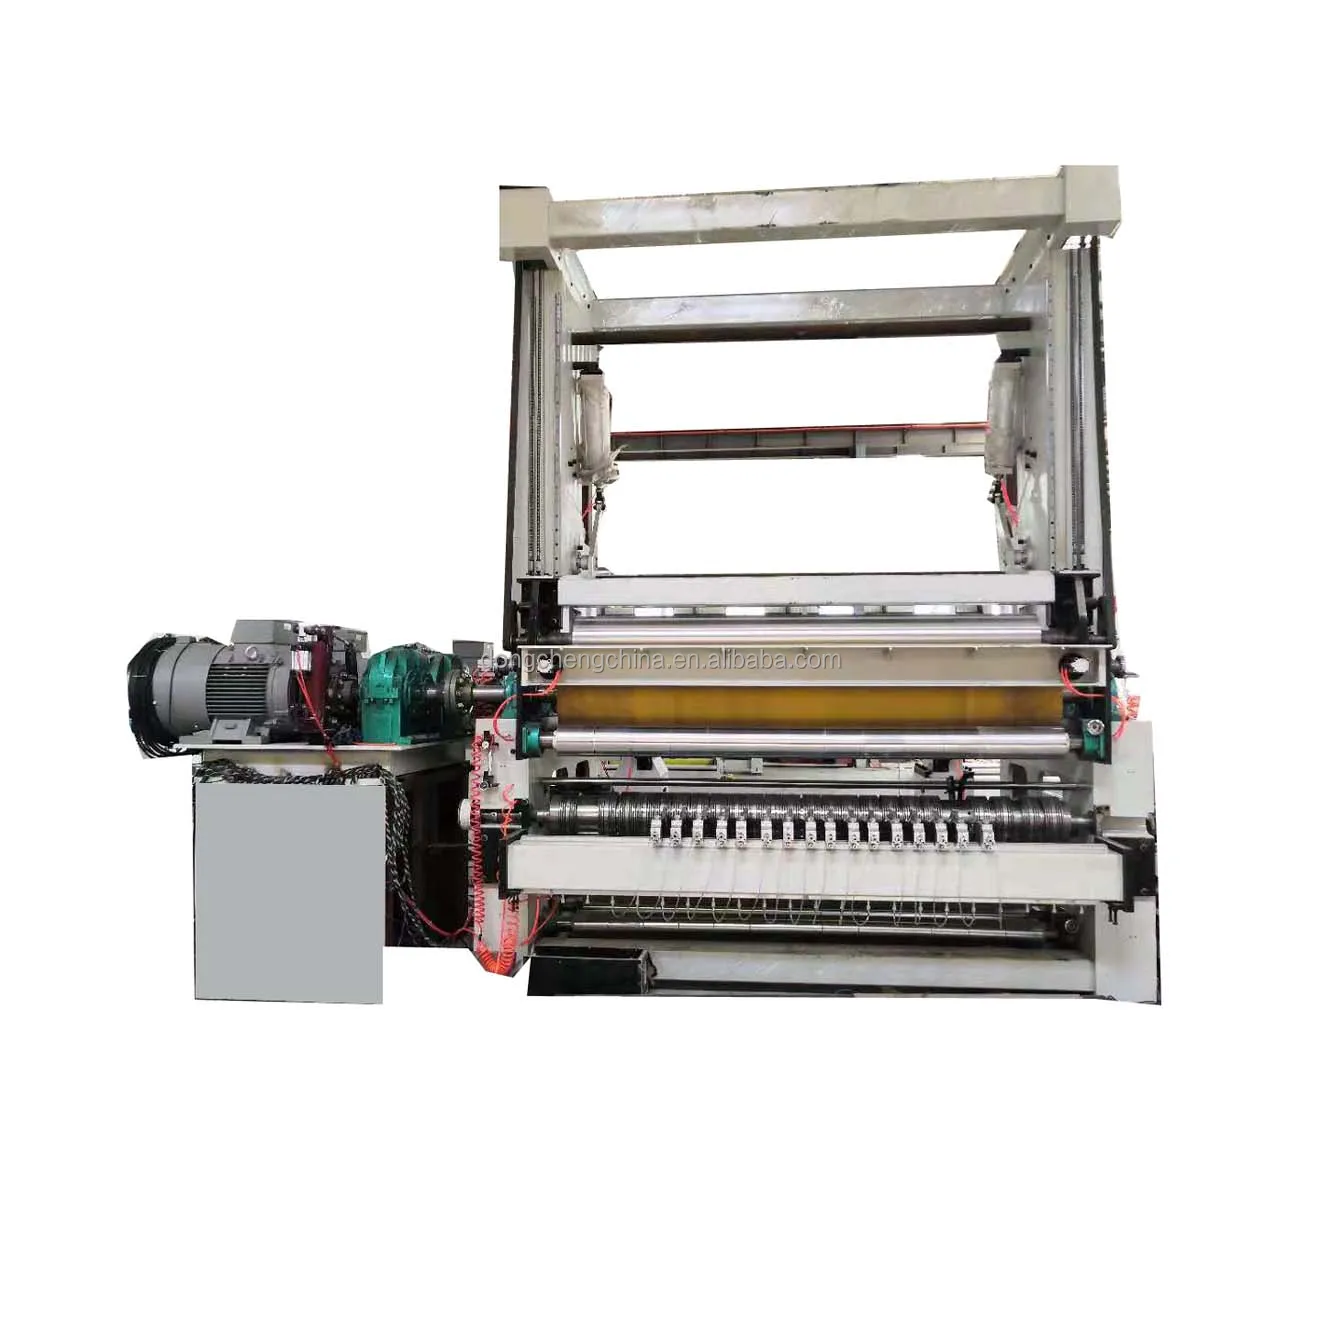 ZWSJ-2500 High speed Jumbo Roll Paper Slitting and rewinding Machine